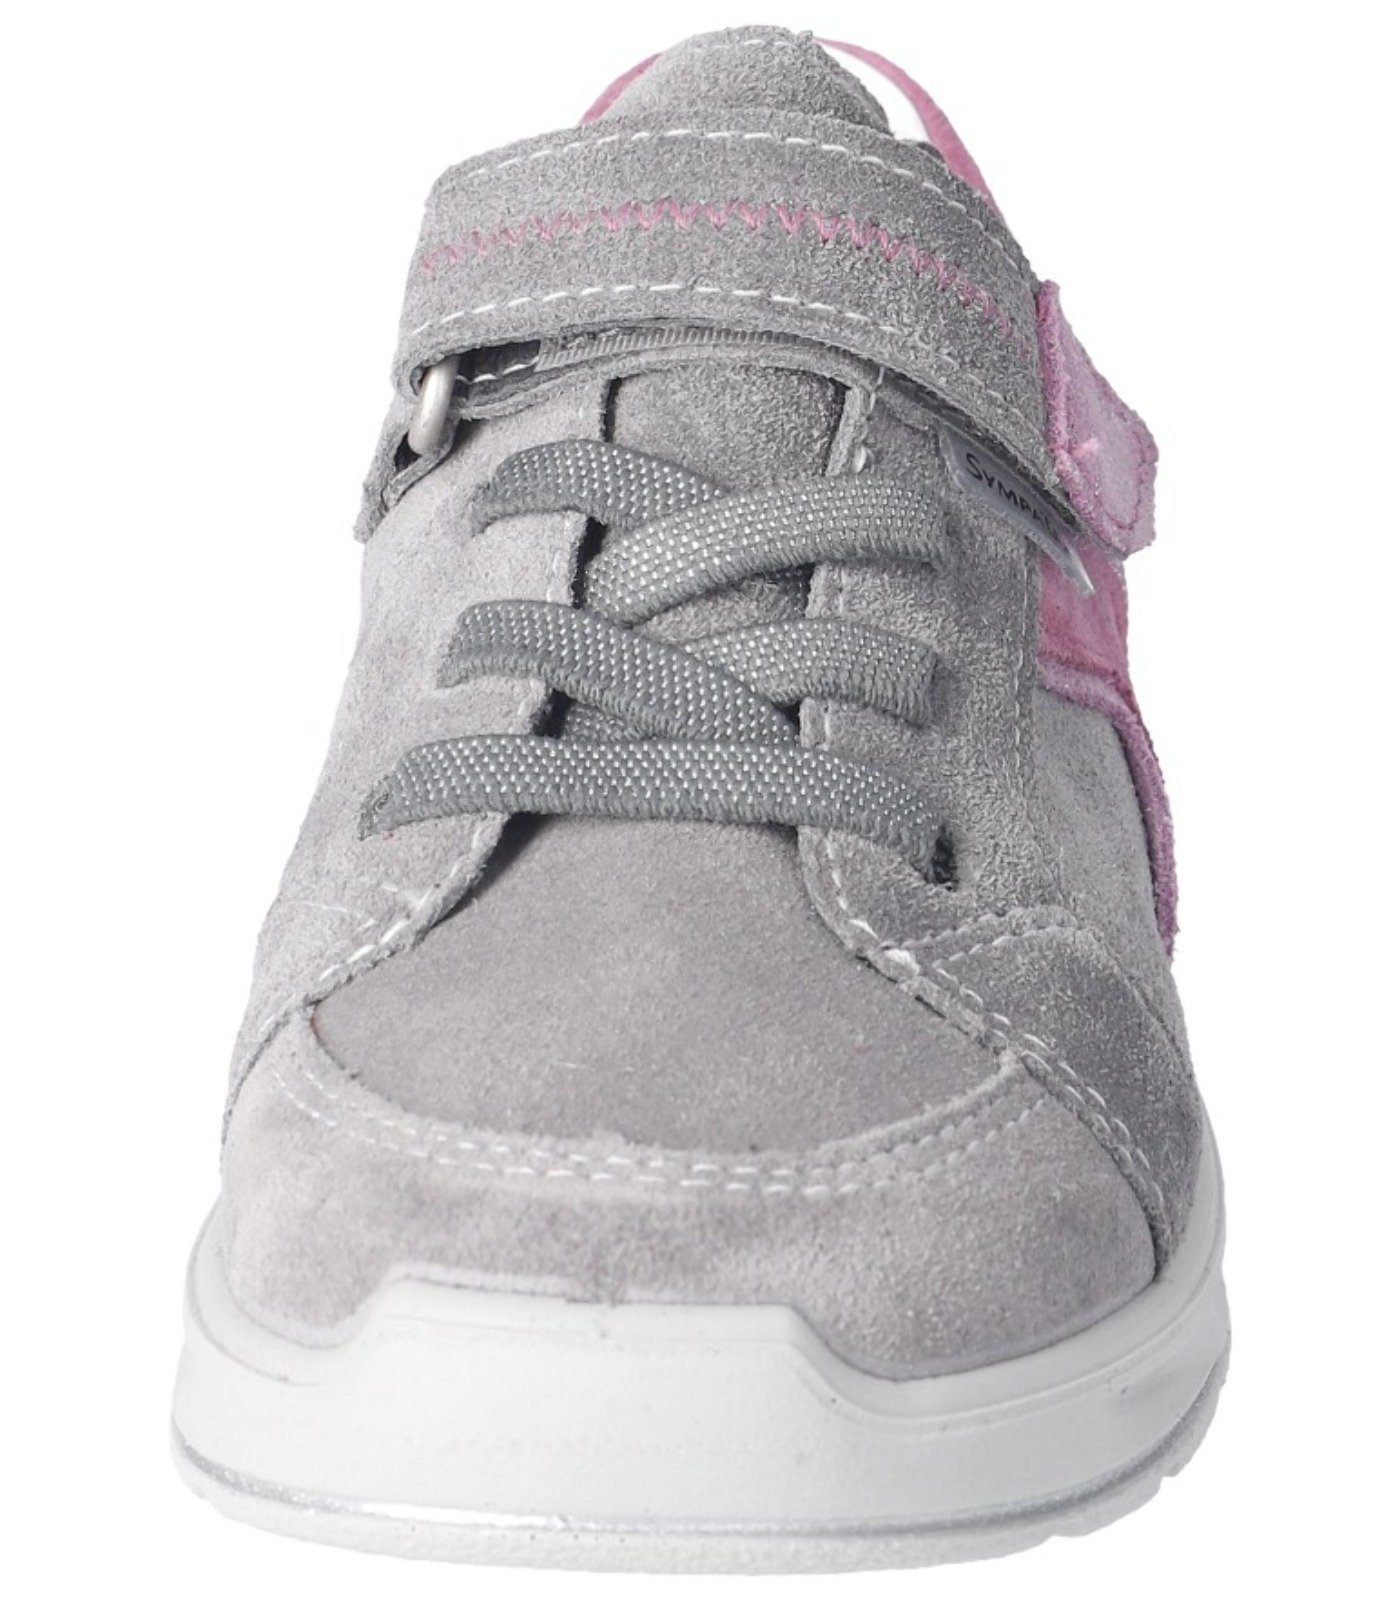 Ricosta Sneaker Grau Leder Pink Sneaker